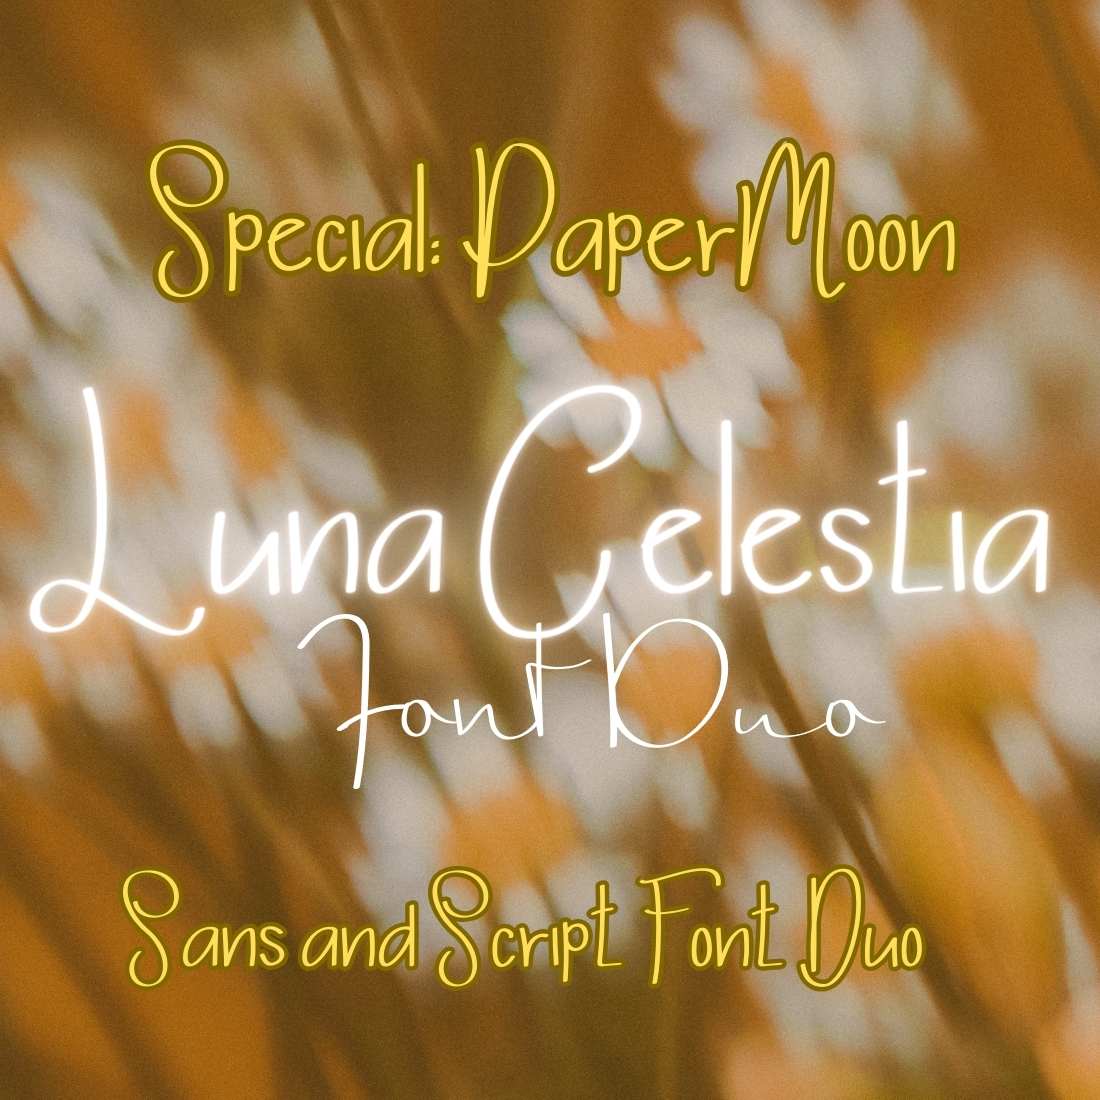 Luna Celestia: Sans and Script Duo cover image.